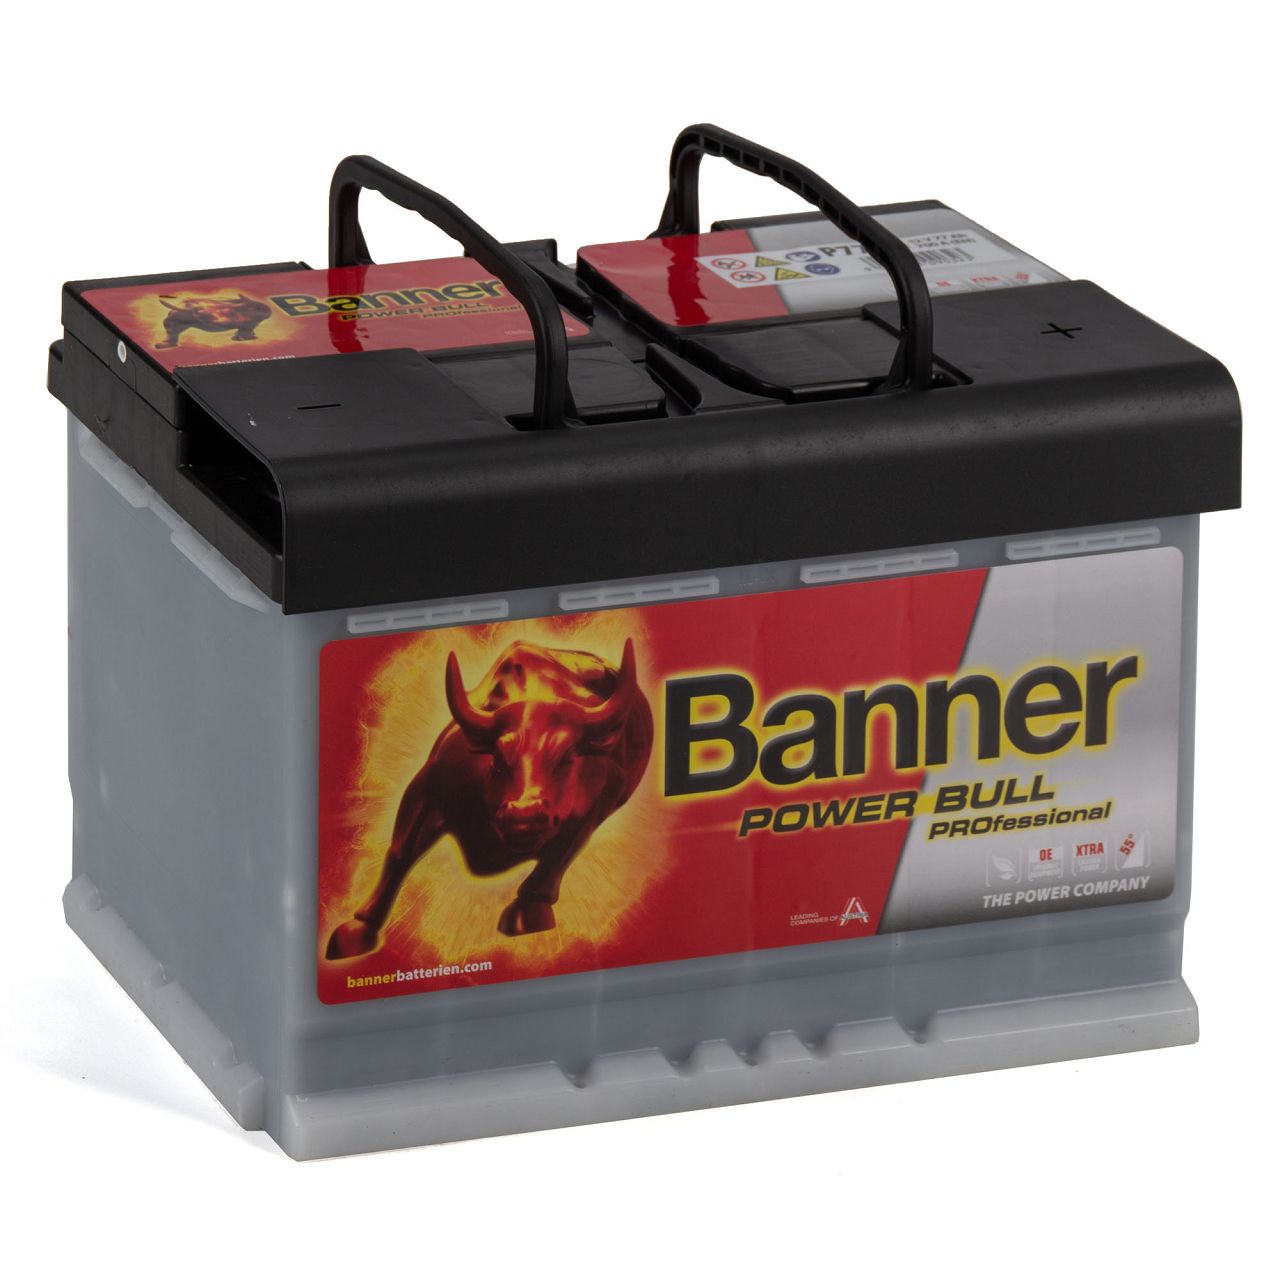 BANNER PROP7740 PRO P7740 Power Bull Professional Autobatterie Batterie 12V 77Ah